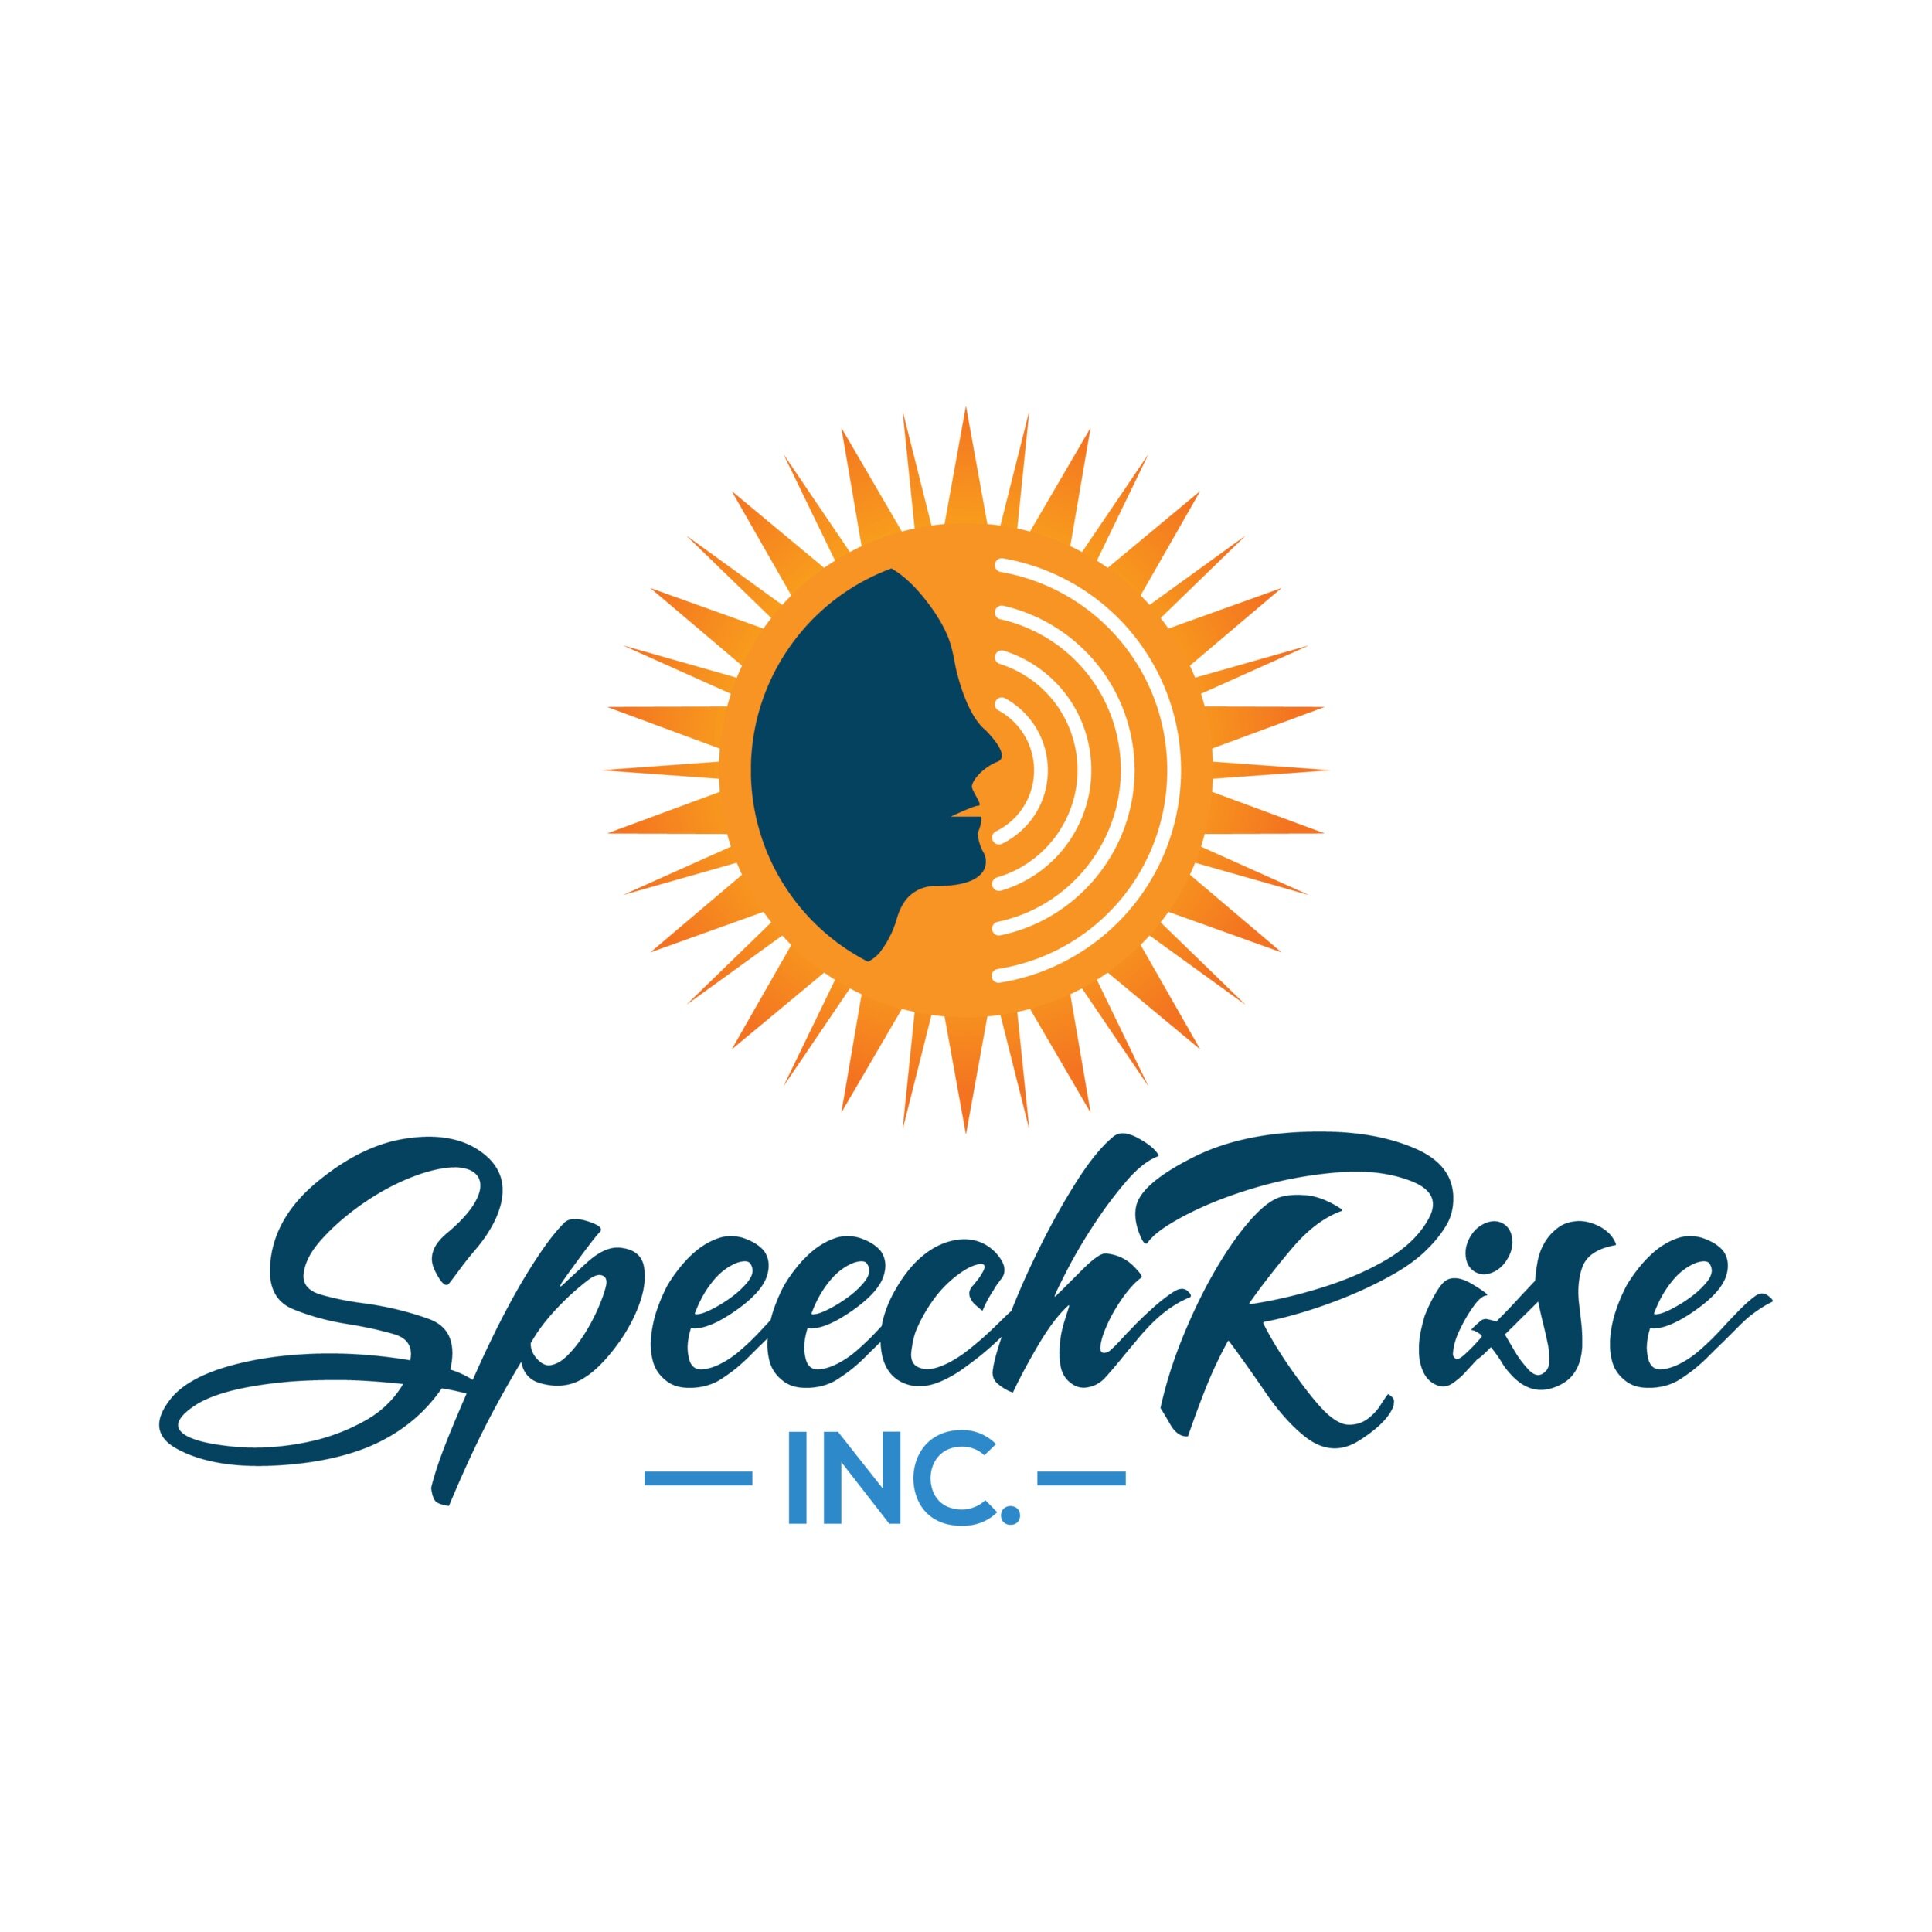 SpeechRise Inc. 